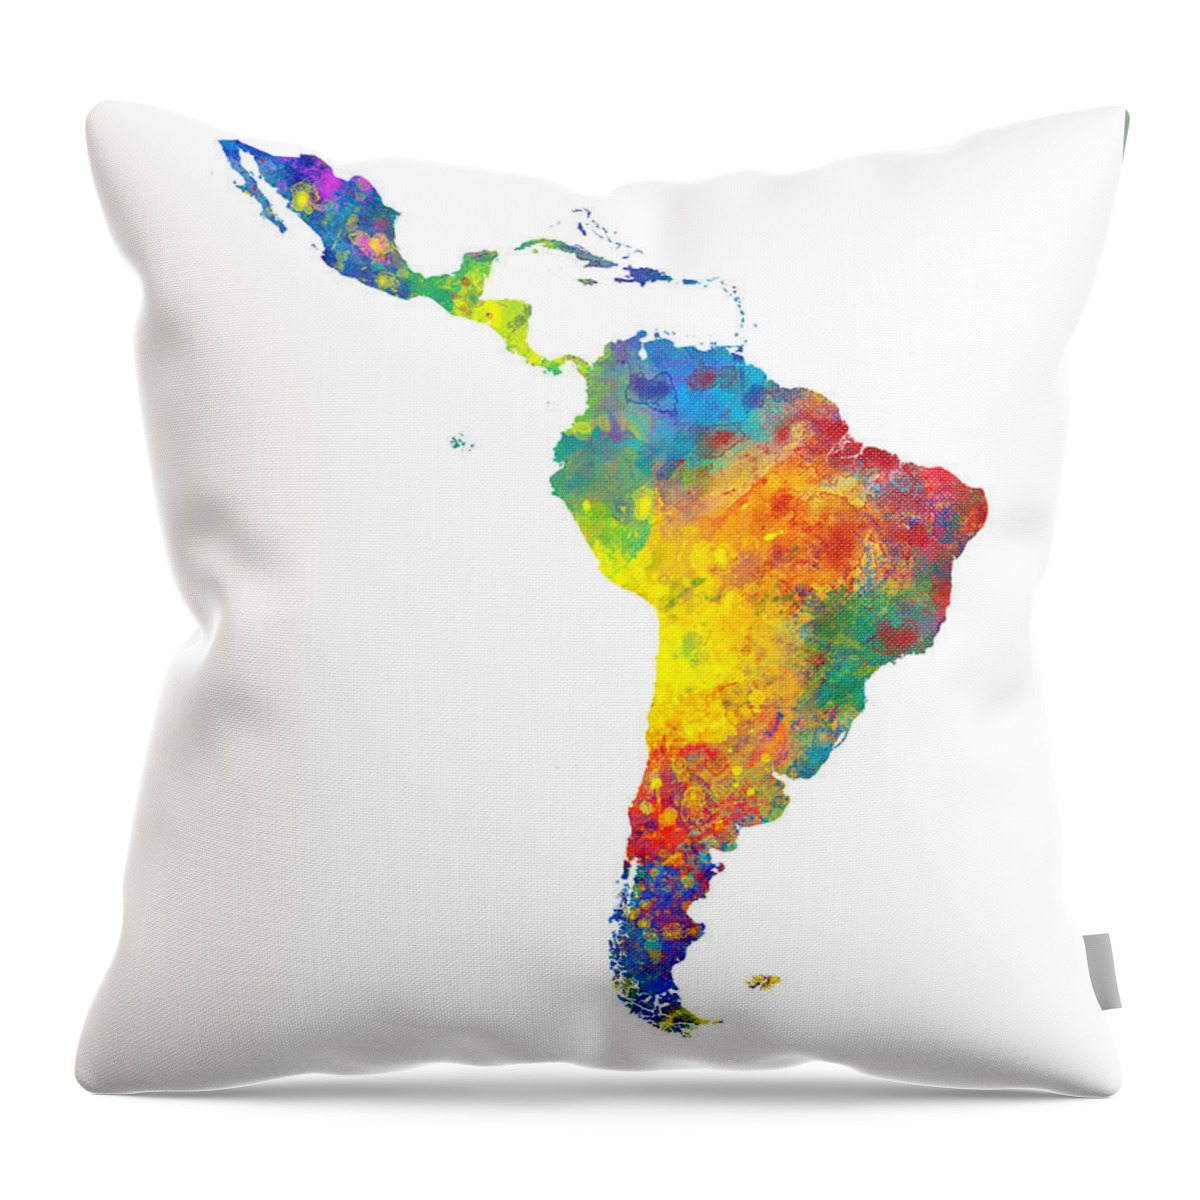 Latin America Throw Pillow featuring the digital art Latin America Watercolor Map by Michael Tompsett